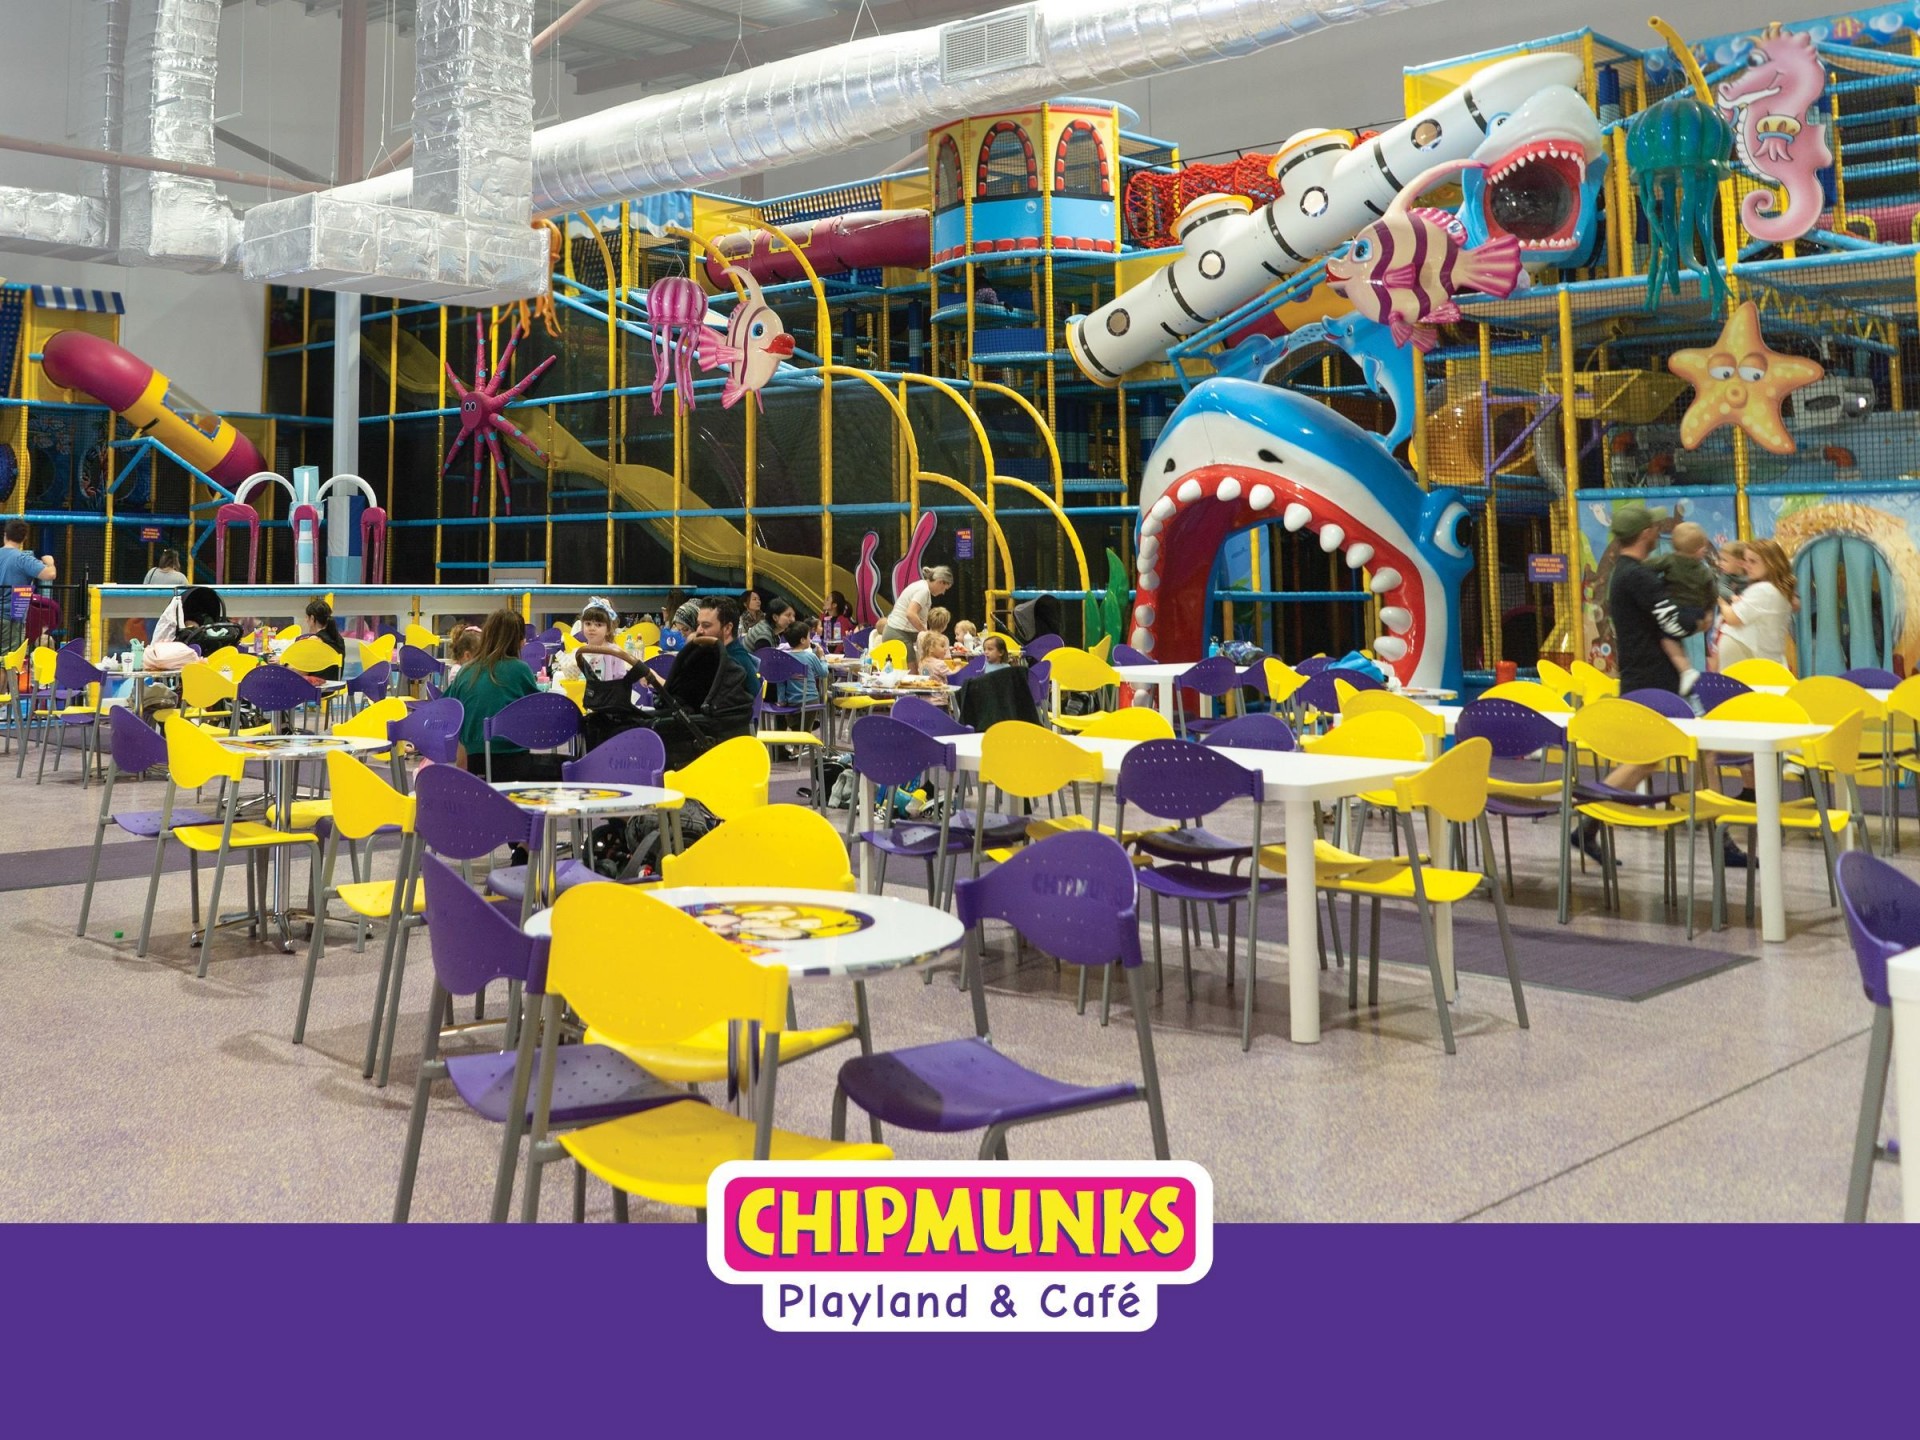 Chipmunks indoor playground franchise for sale - Port Kennedy...